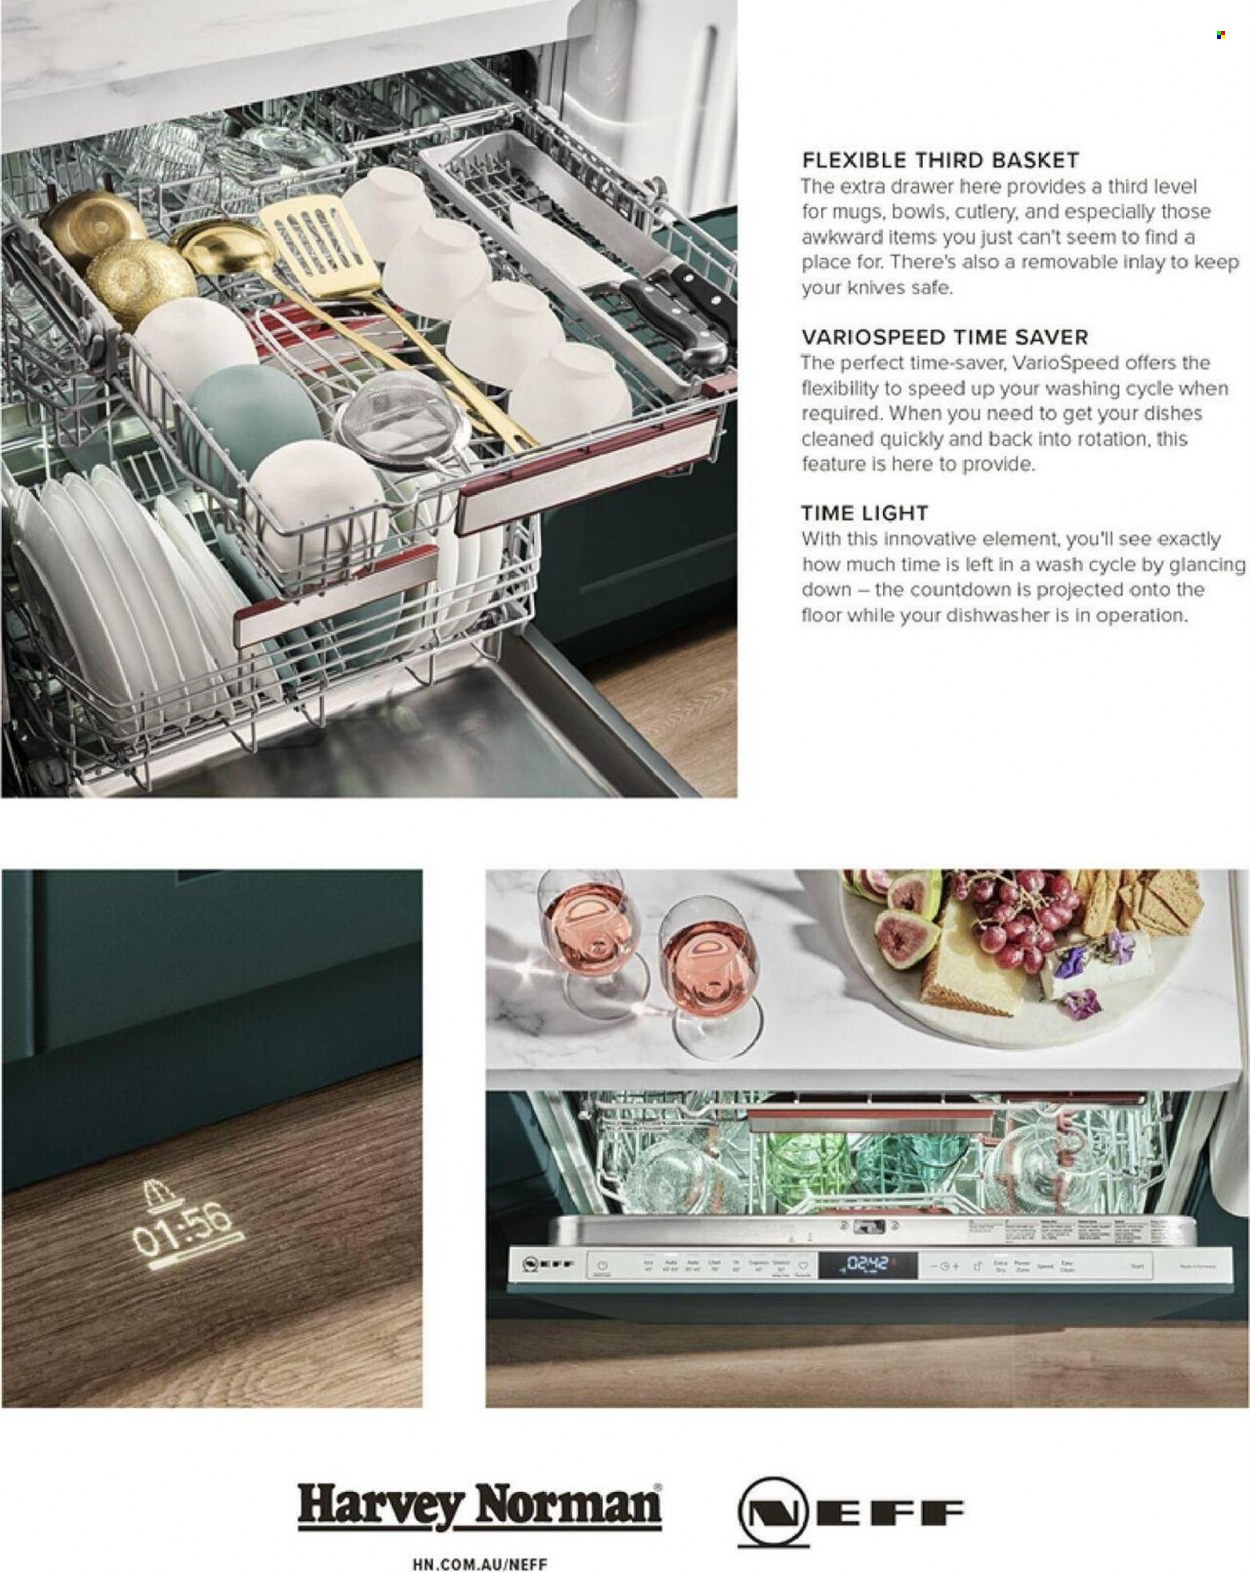 thumbnail - Harvey Norman Catalogue - 2 Mar 2022 - 30 Jun 2022 - Sales products - basket, knife, dishwasher. Page 9.